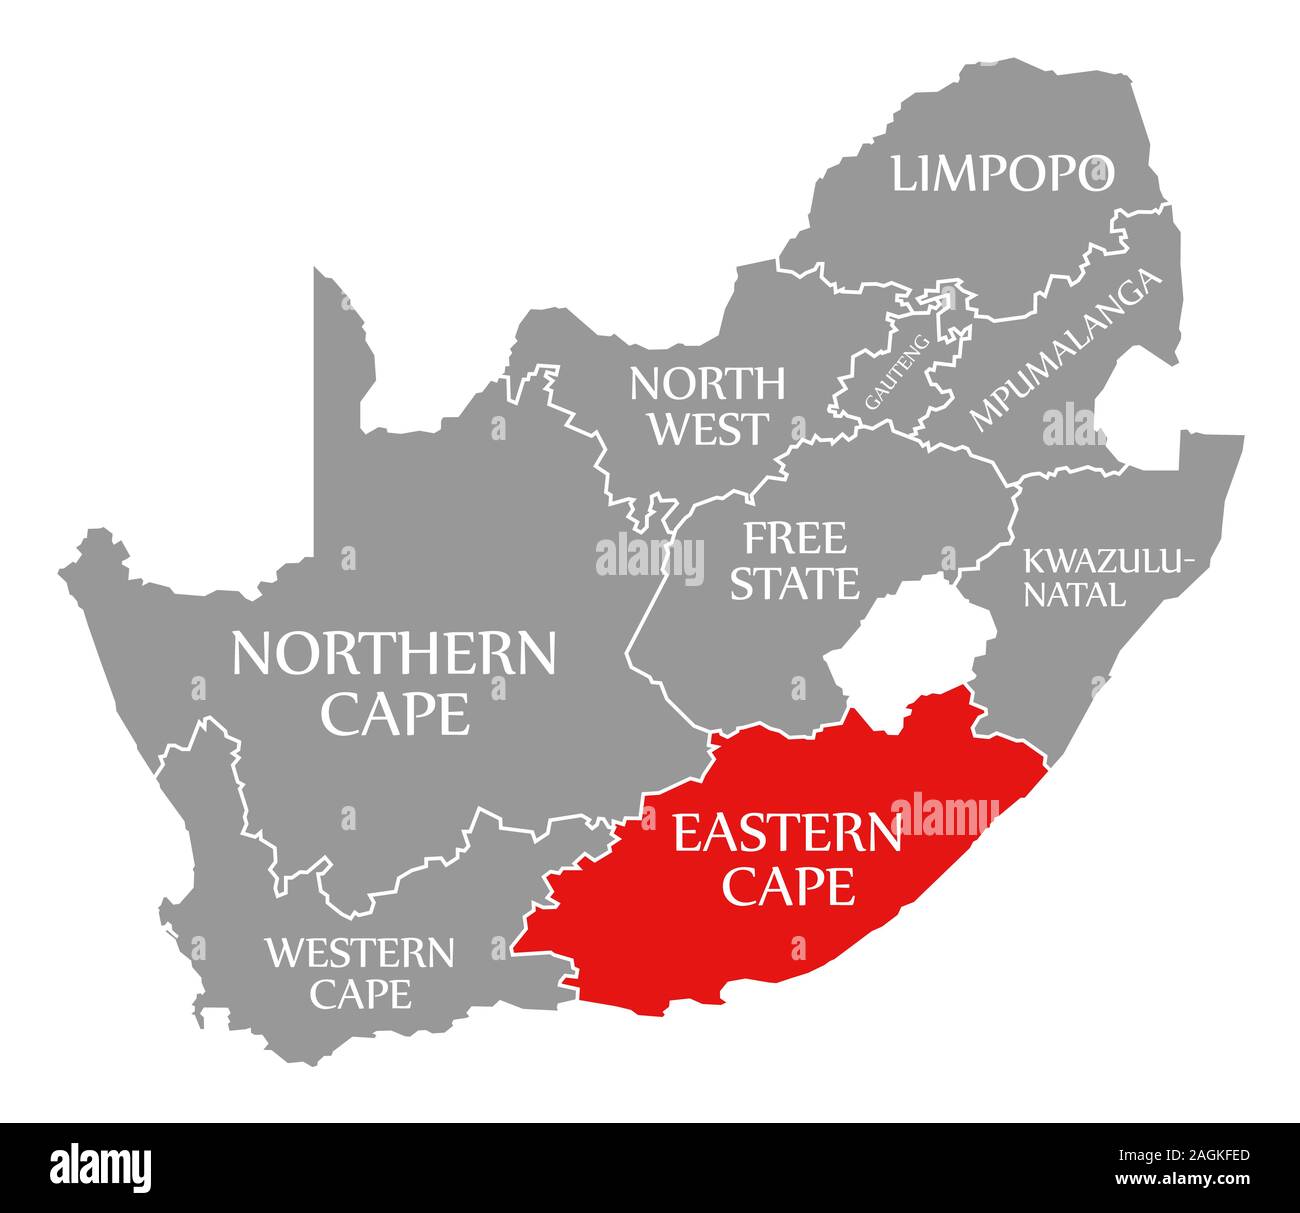 Eastern Cape rot hervorgehoben Karte von Südafrika Stockfoto